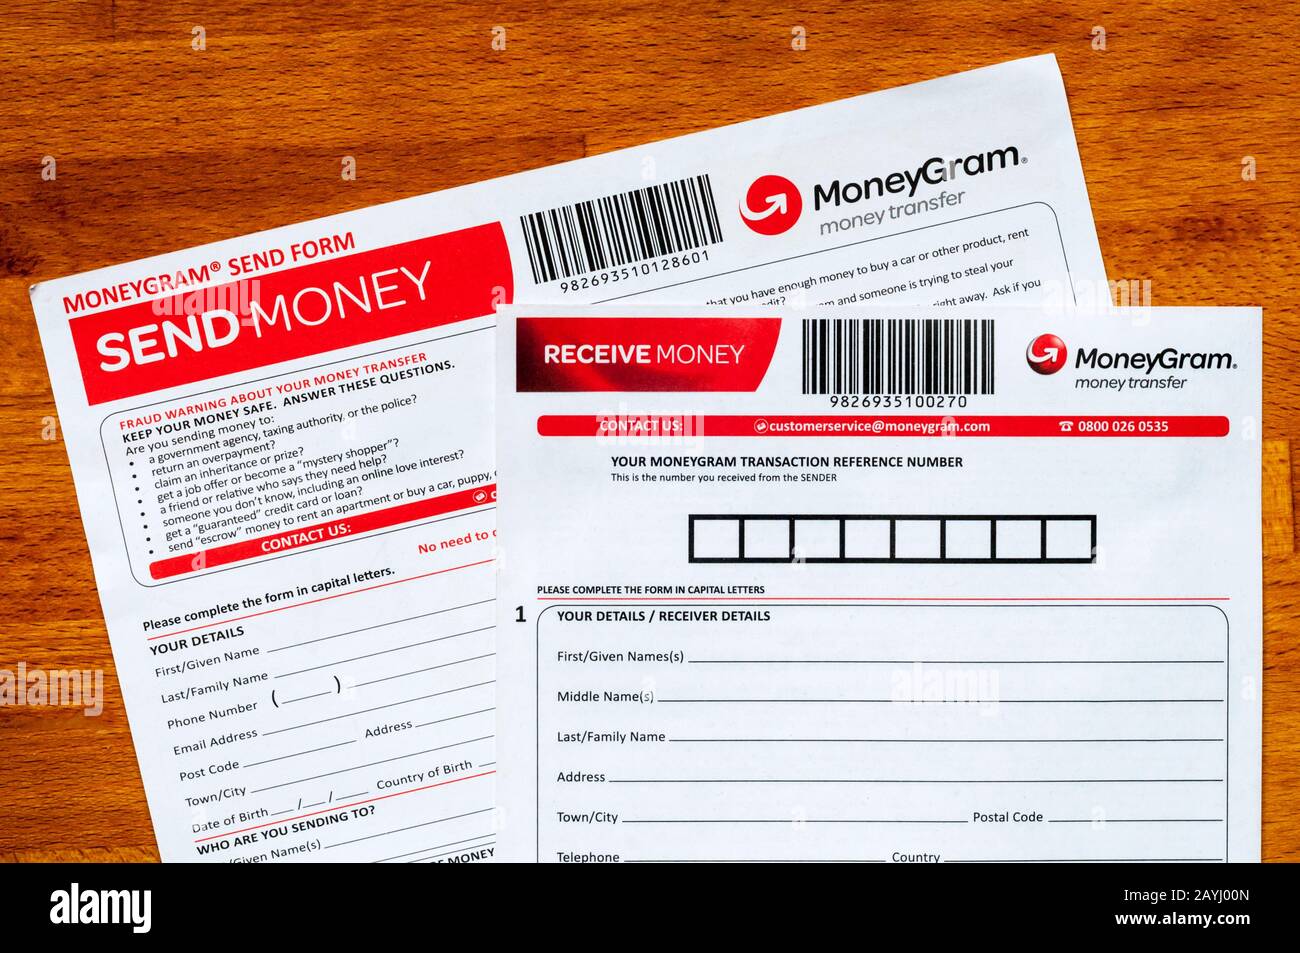 MoneyGram money transfer Send Money and Receive money forms. Stock Photo